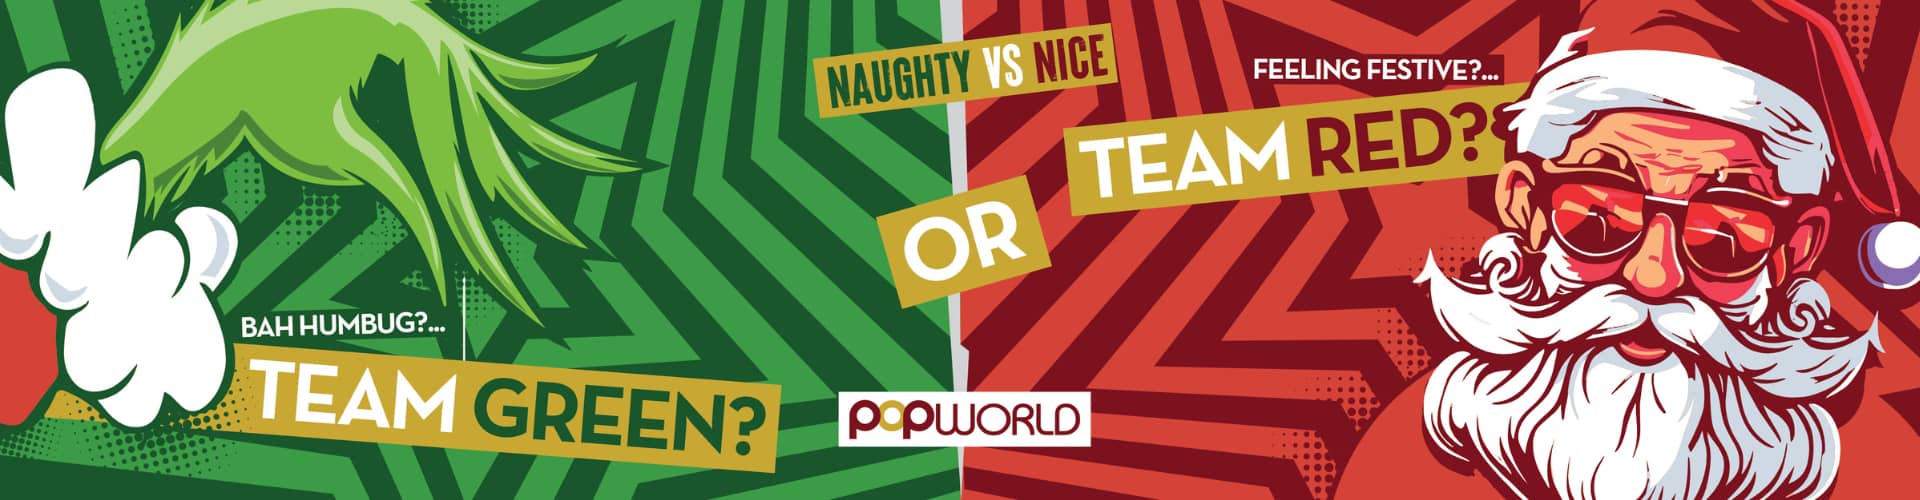 Popworld Birmingham - Naughty vs Nice - Are you Team Green or Team Red?